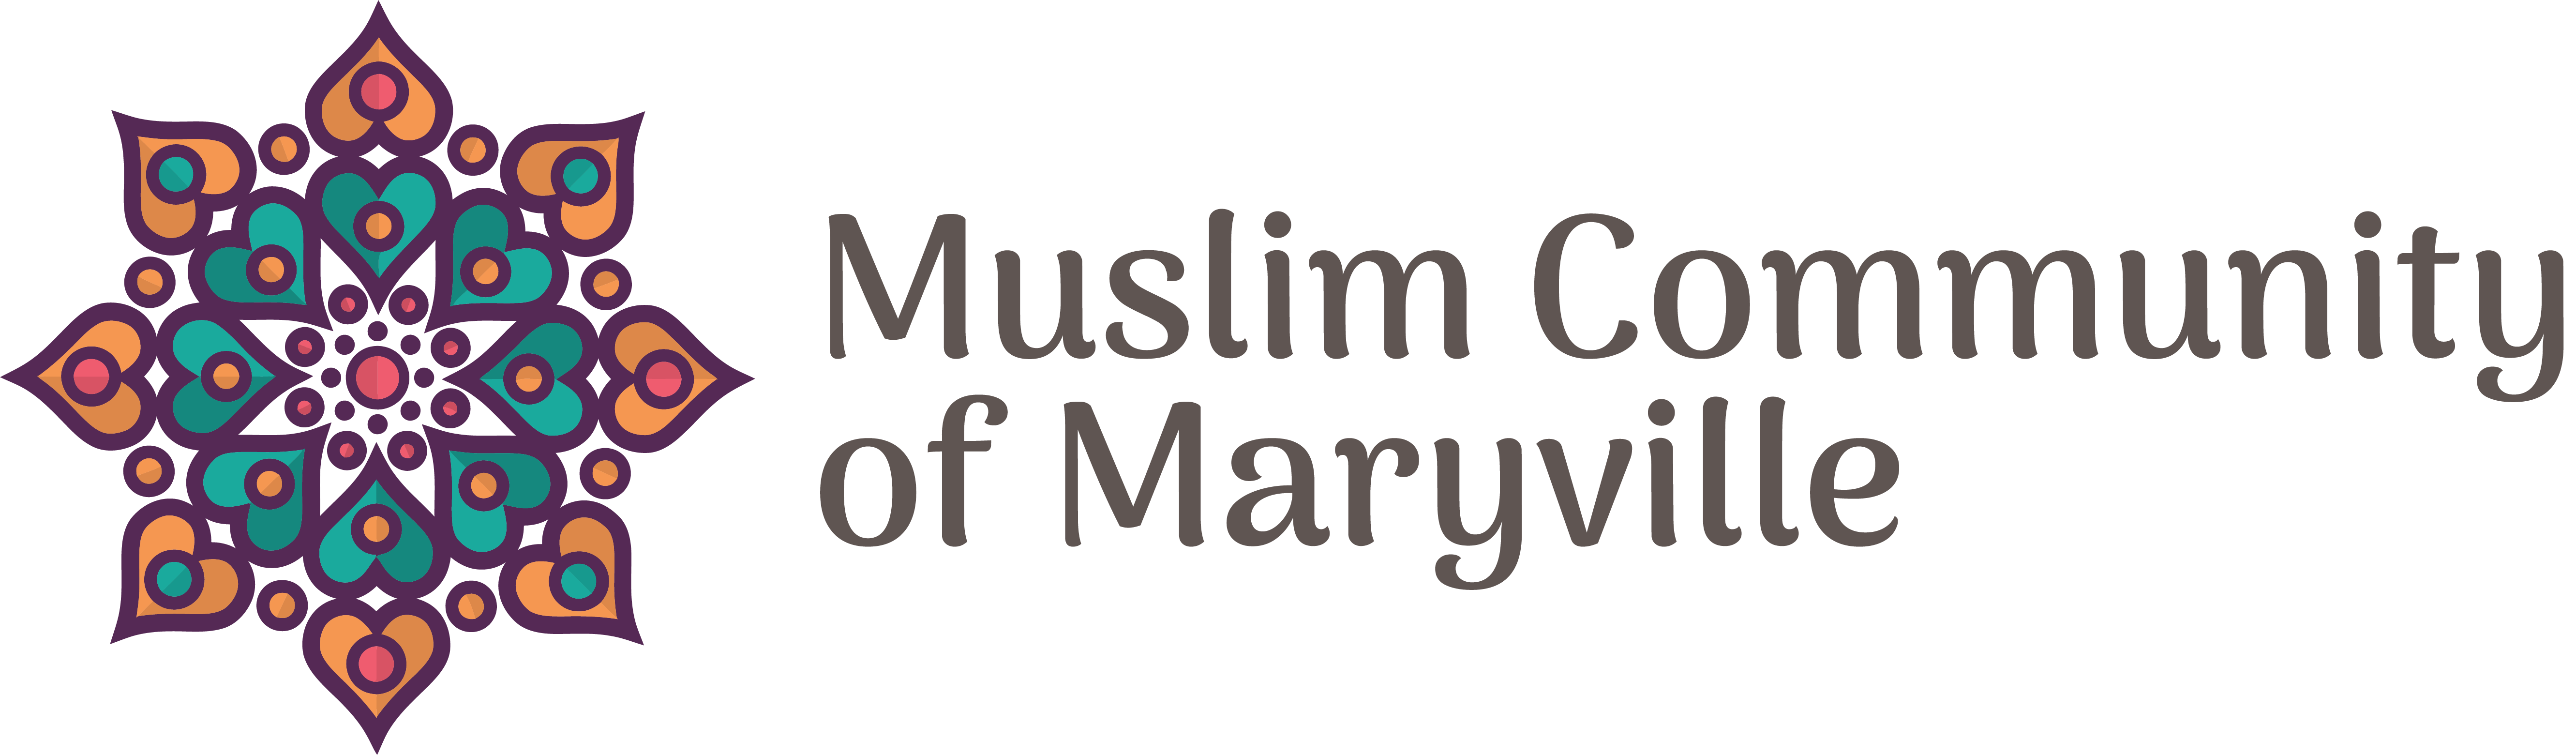 Muslim Community of Maryville logo